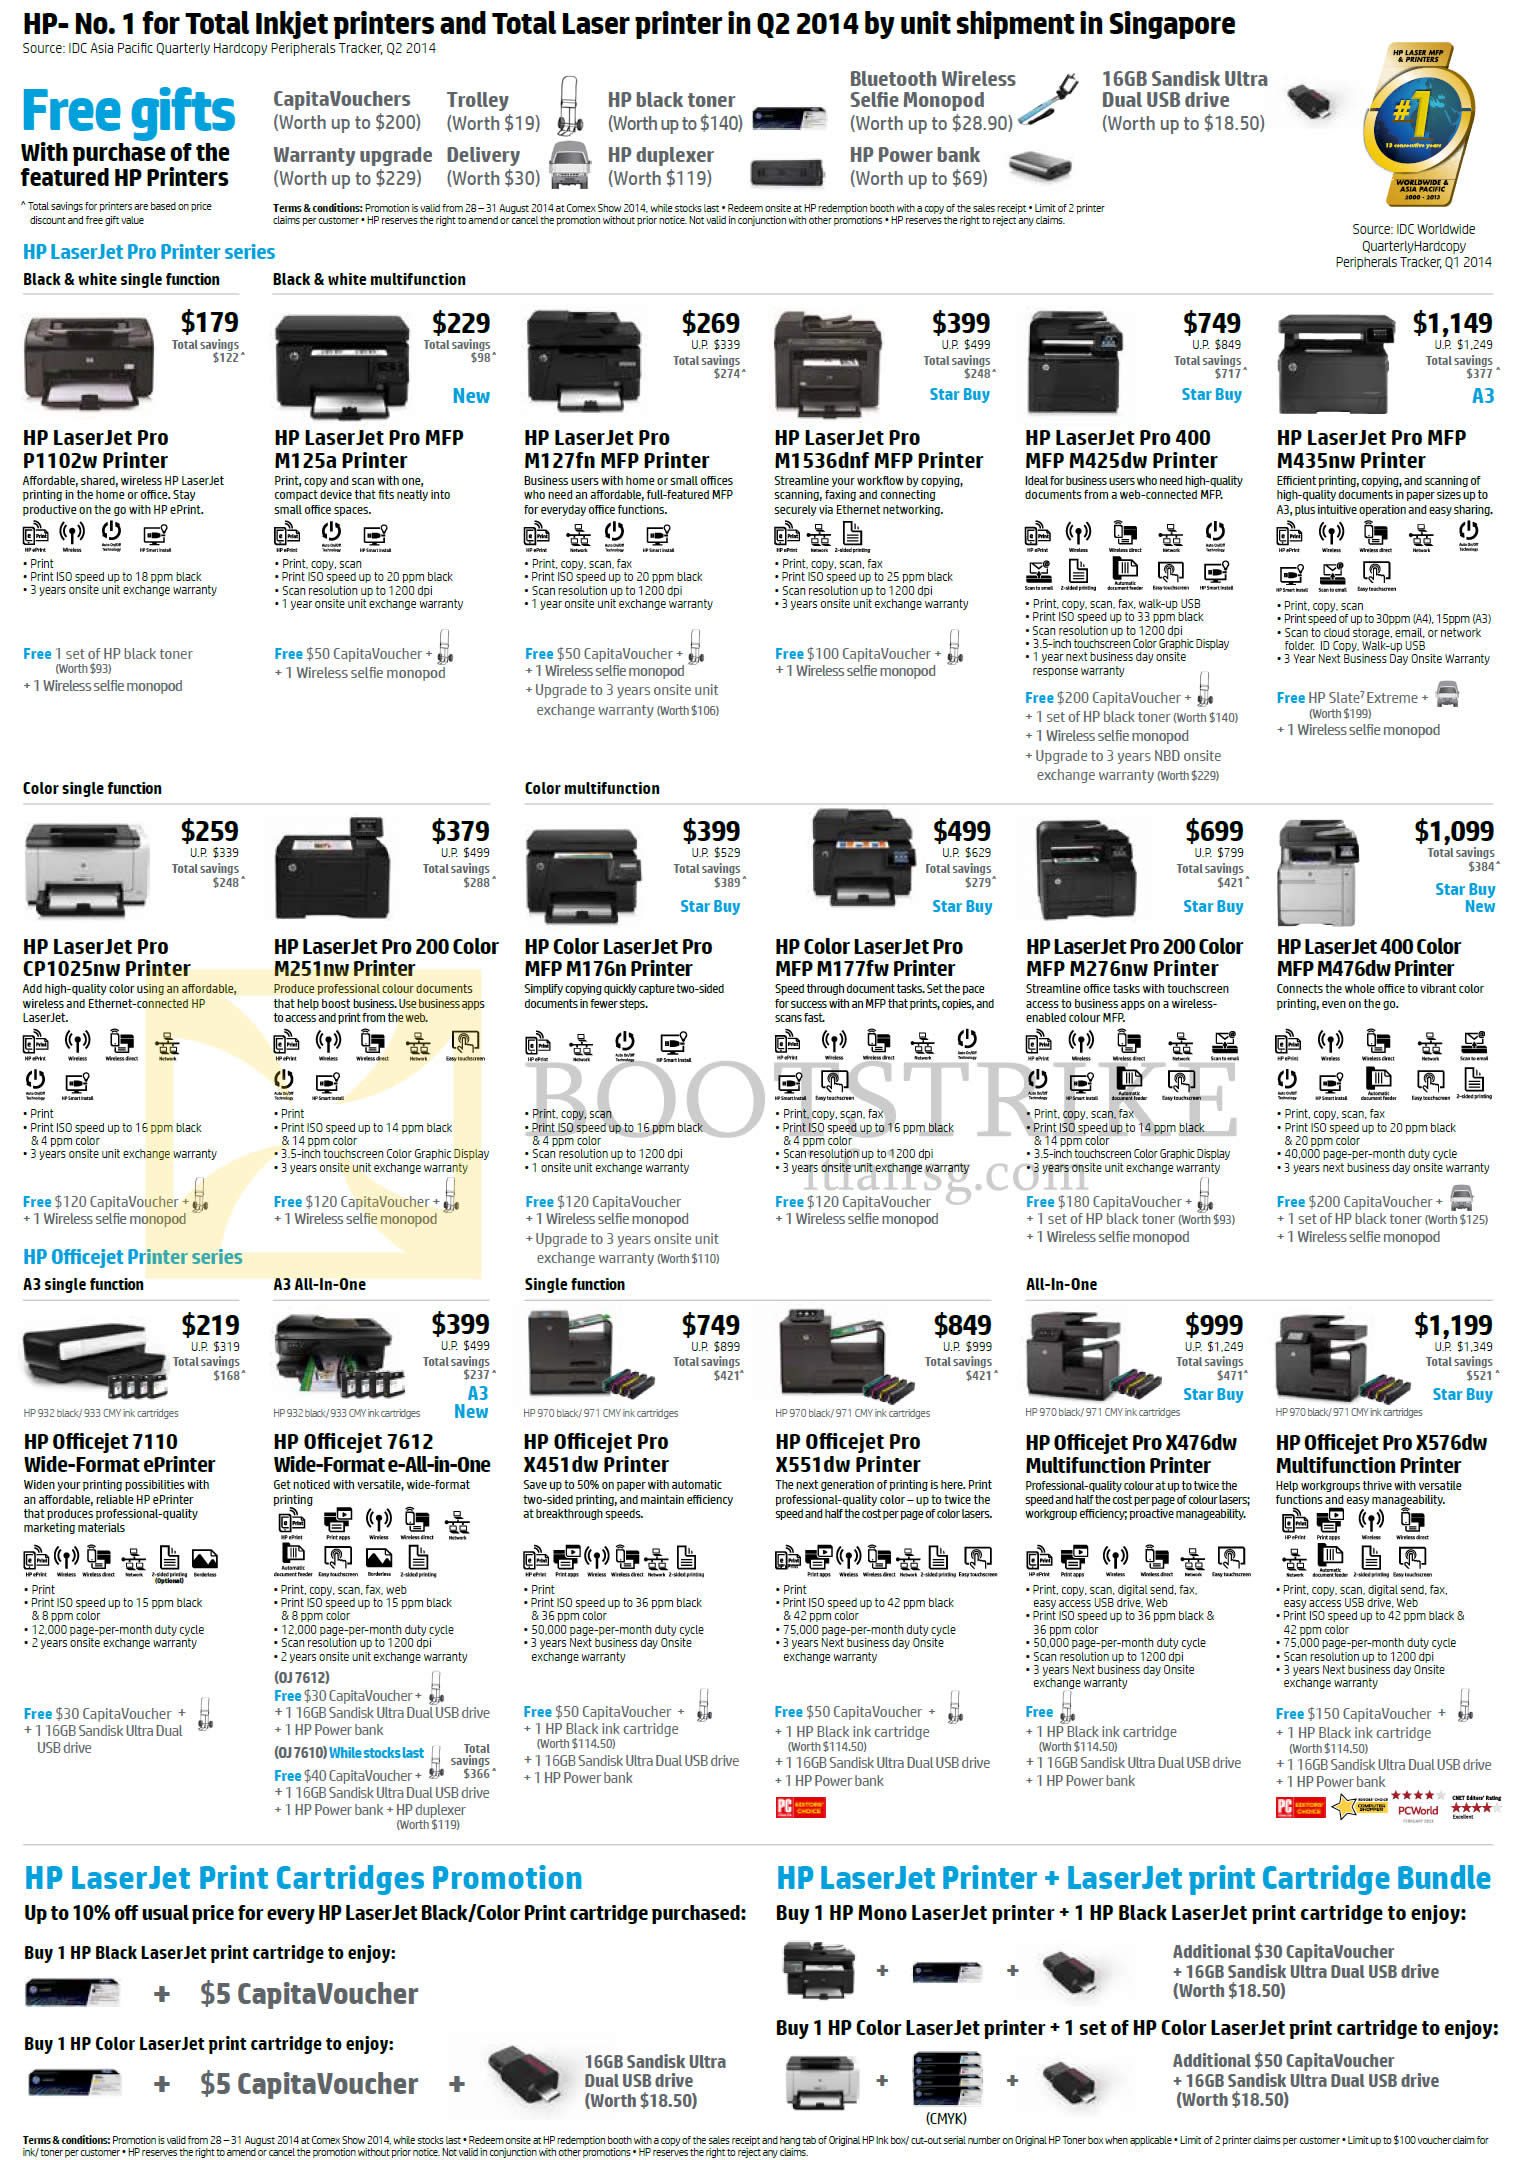 COMEX 2014 price list image brochure of HP Printers LaserJet Pro P1102W, M125a M127fn M1536dnf, 400, M435nw, CP1025nw, M251nw, M176n, M177fw M276nw M476dw, OfficeJet 7110 7612, X451dw, X551dw, Pro X476dw X576dw